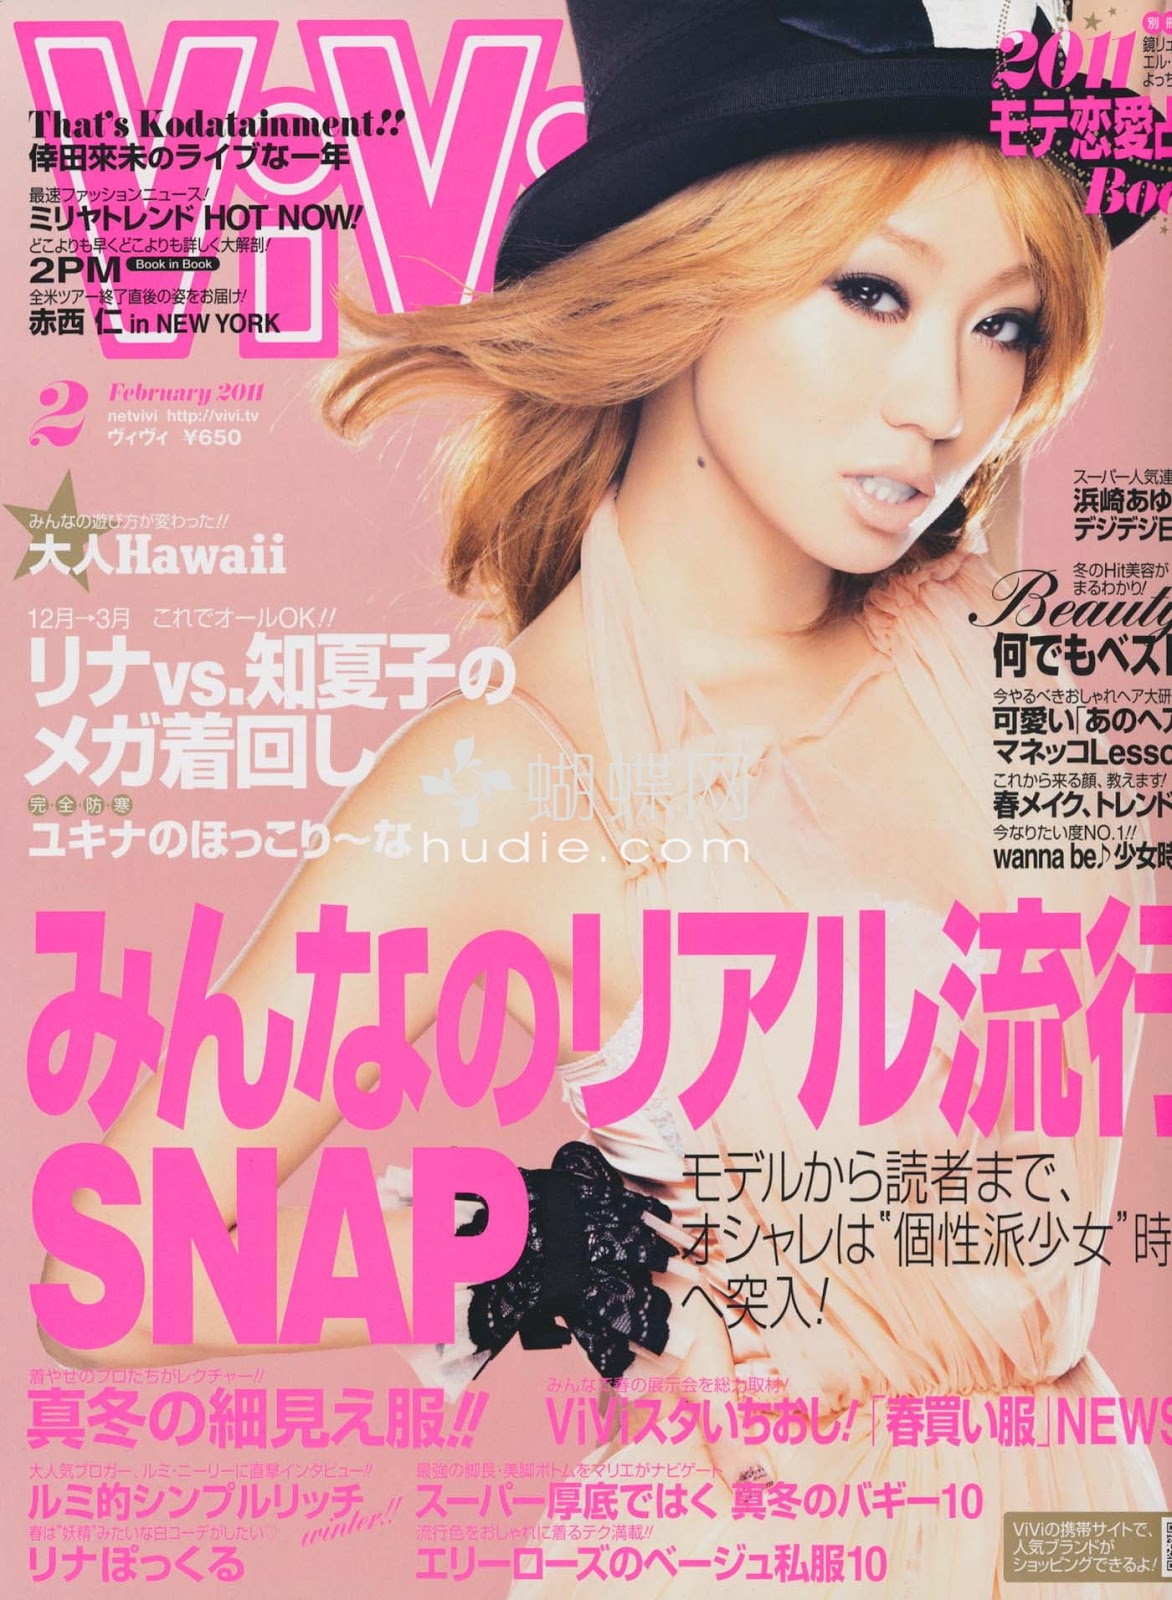 Vivi Jp Magazine February 11 Issue Mag Scans Memorable Days Beauty Blog Korean Beauty European American Product Reviews